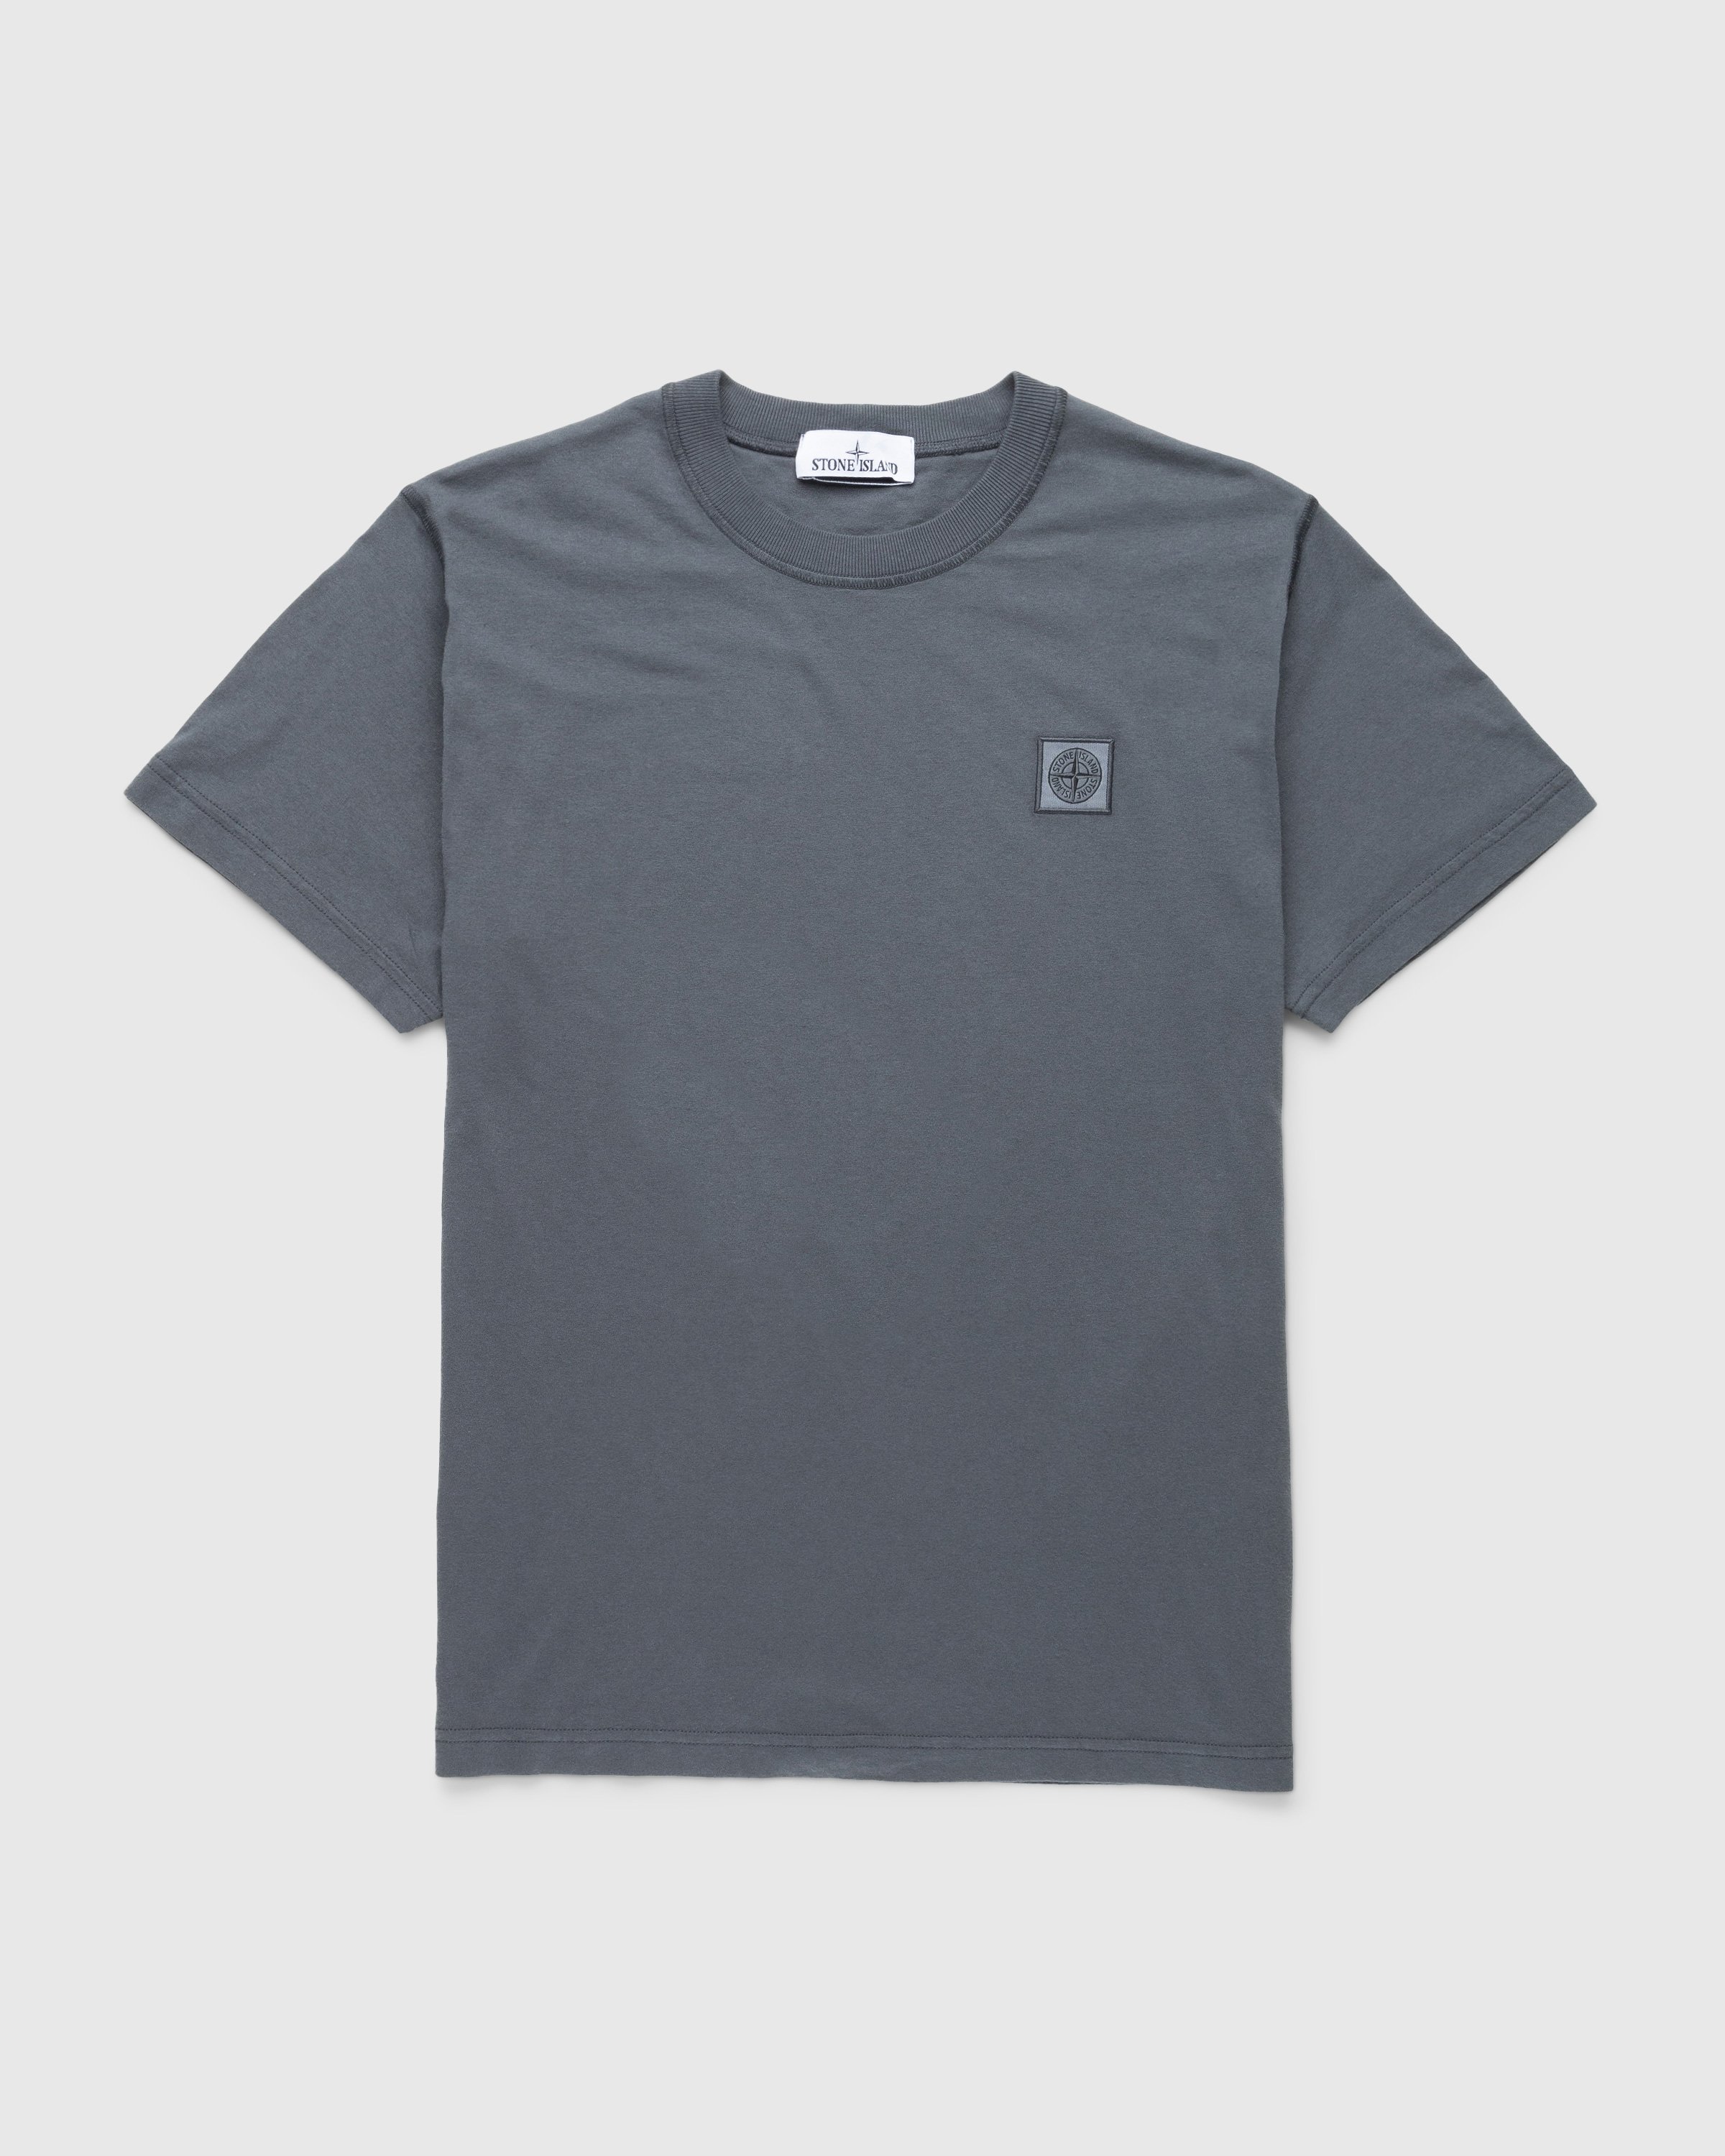 Stone Island - Fissato T-Shirt Lead Grey - Clothing - Grey - Image 1